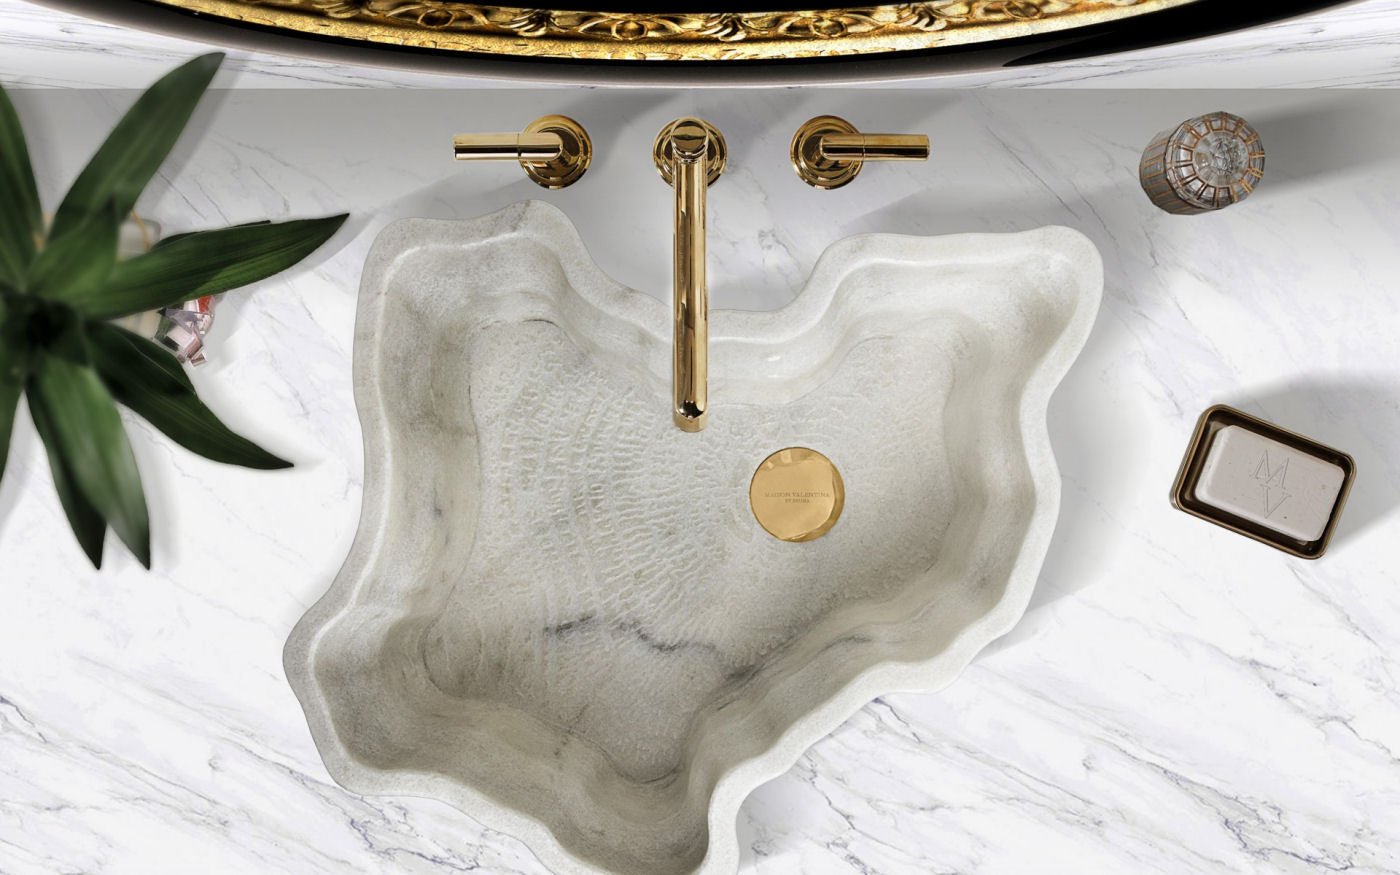 Luxury Eden Stone Vessel Sink by Maison Valentina - |VESIMI Design|